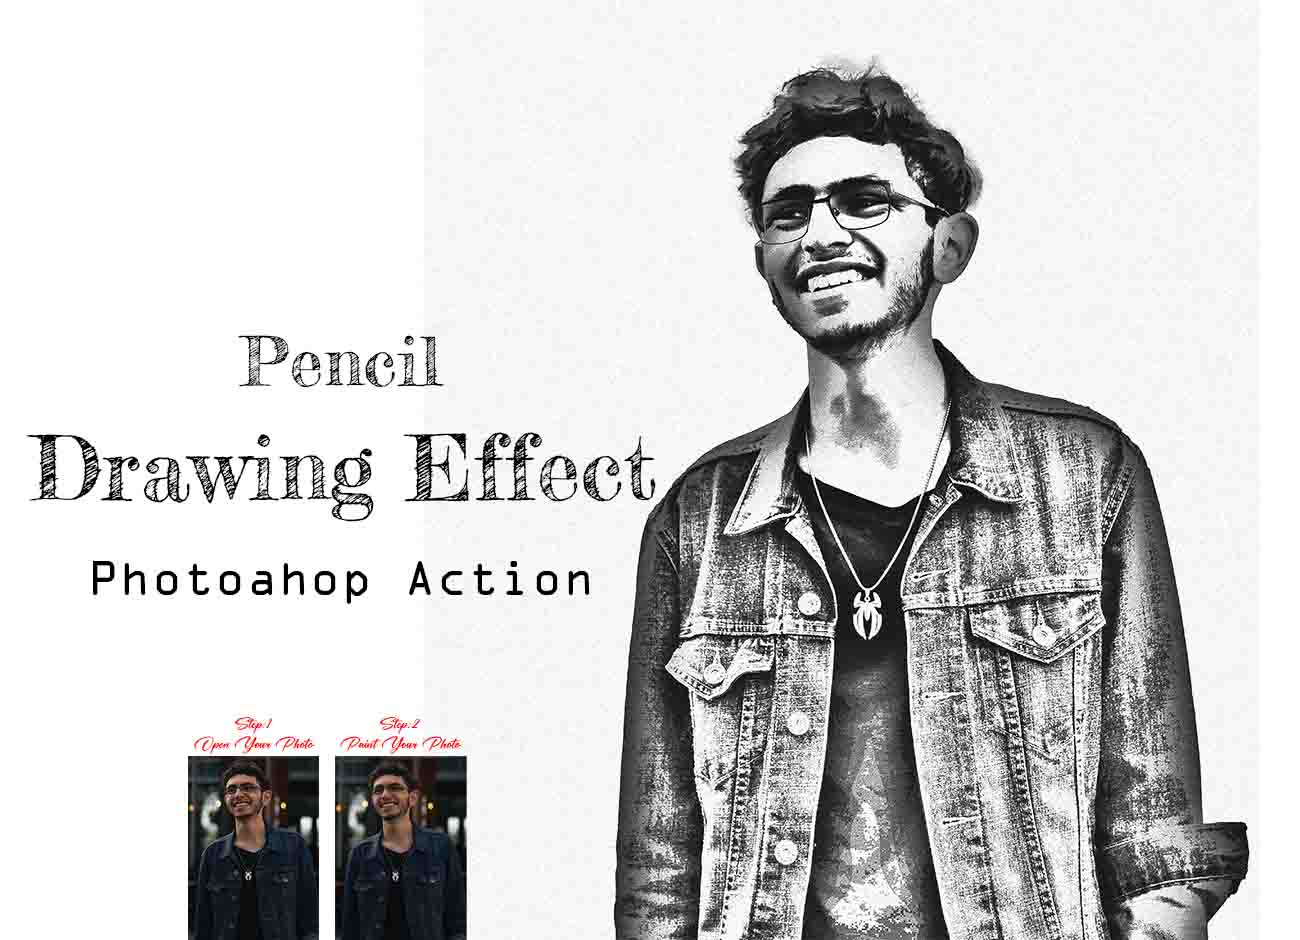 30-in-1 Sketch Effect Photoshop Action Bundle - Artixty